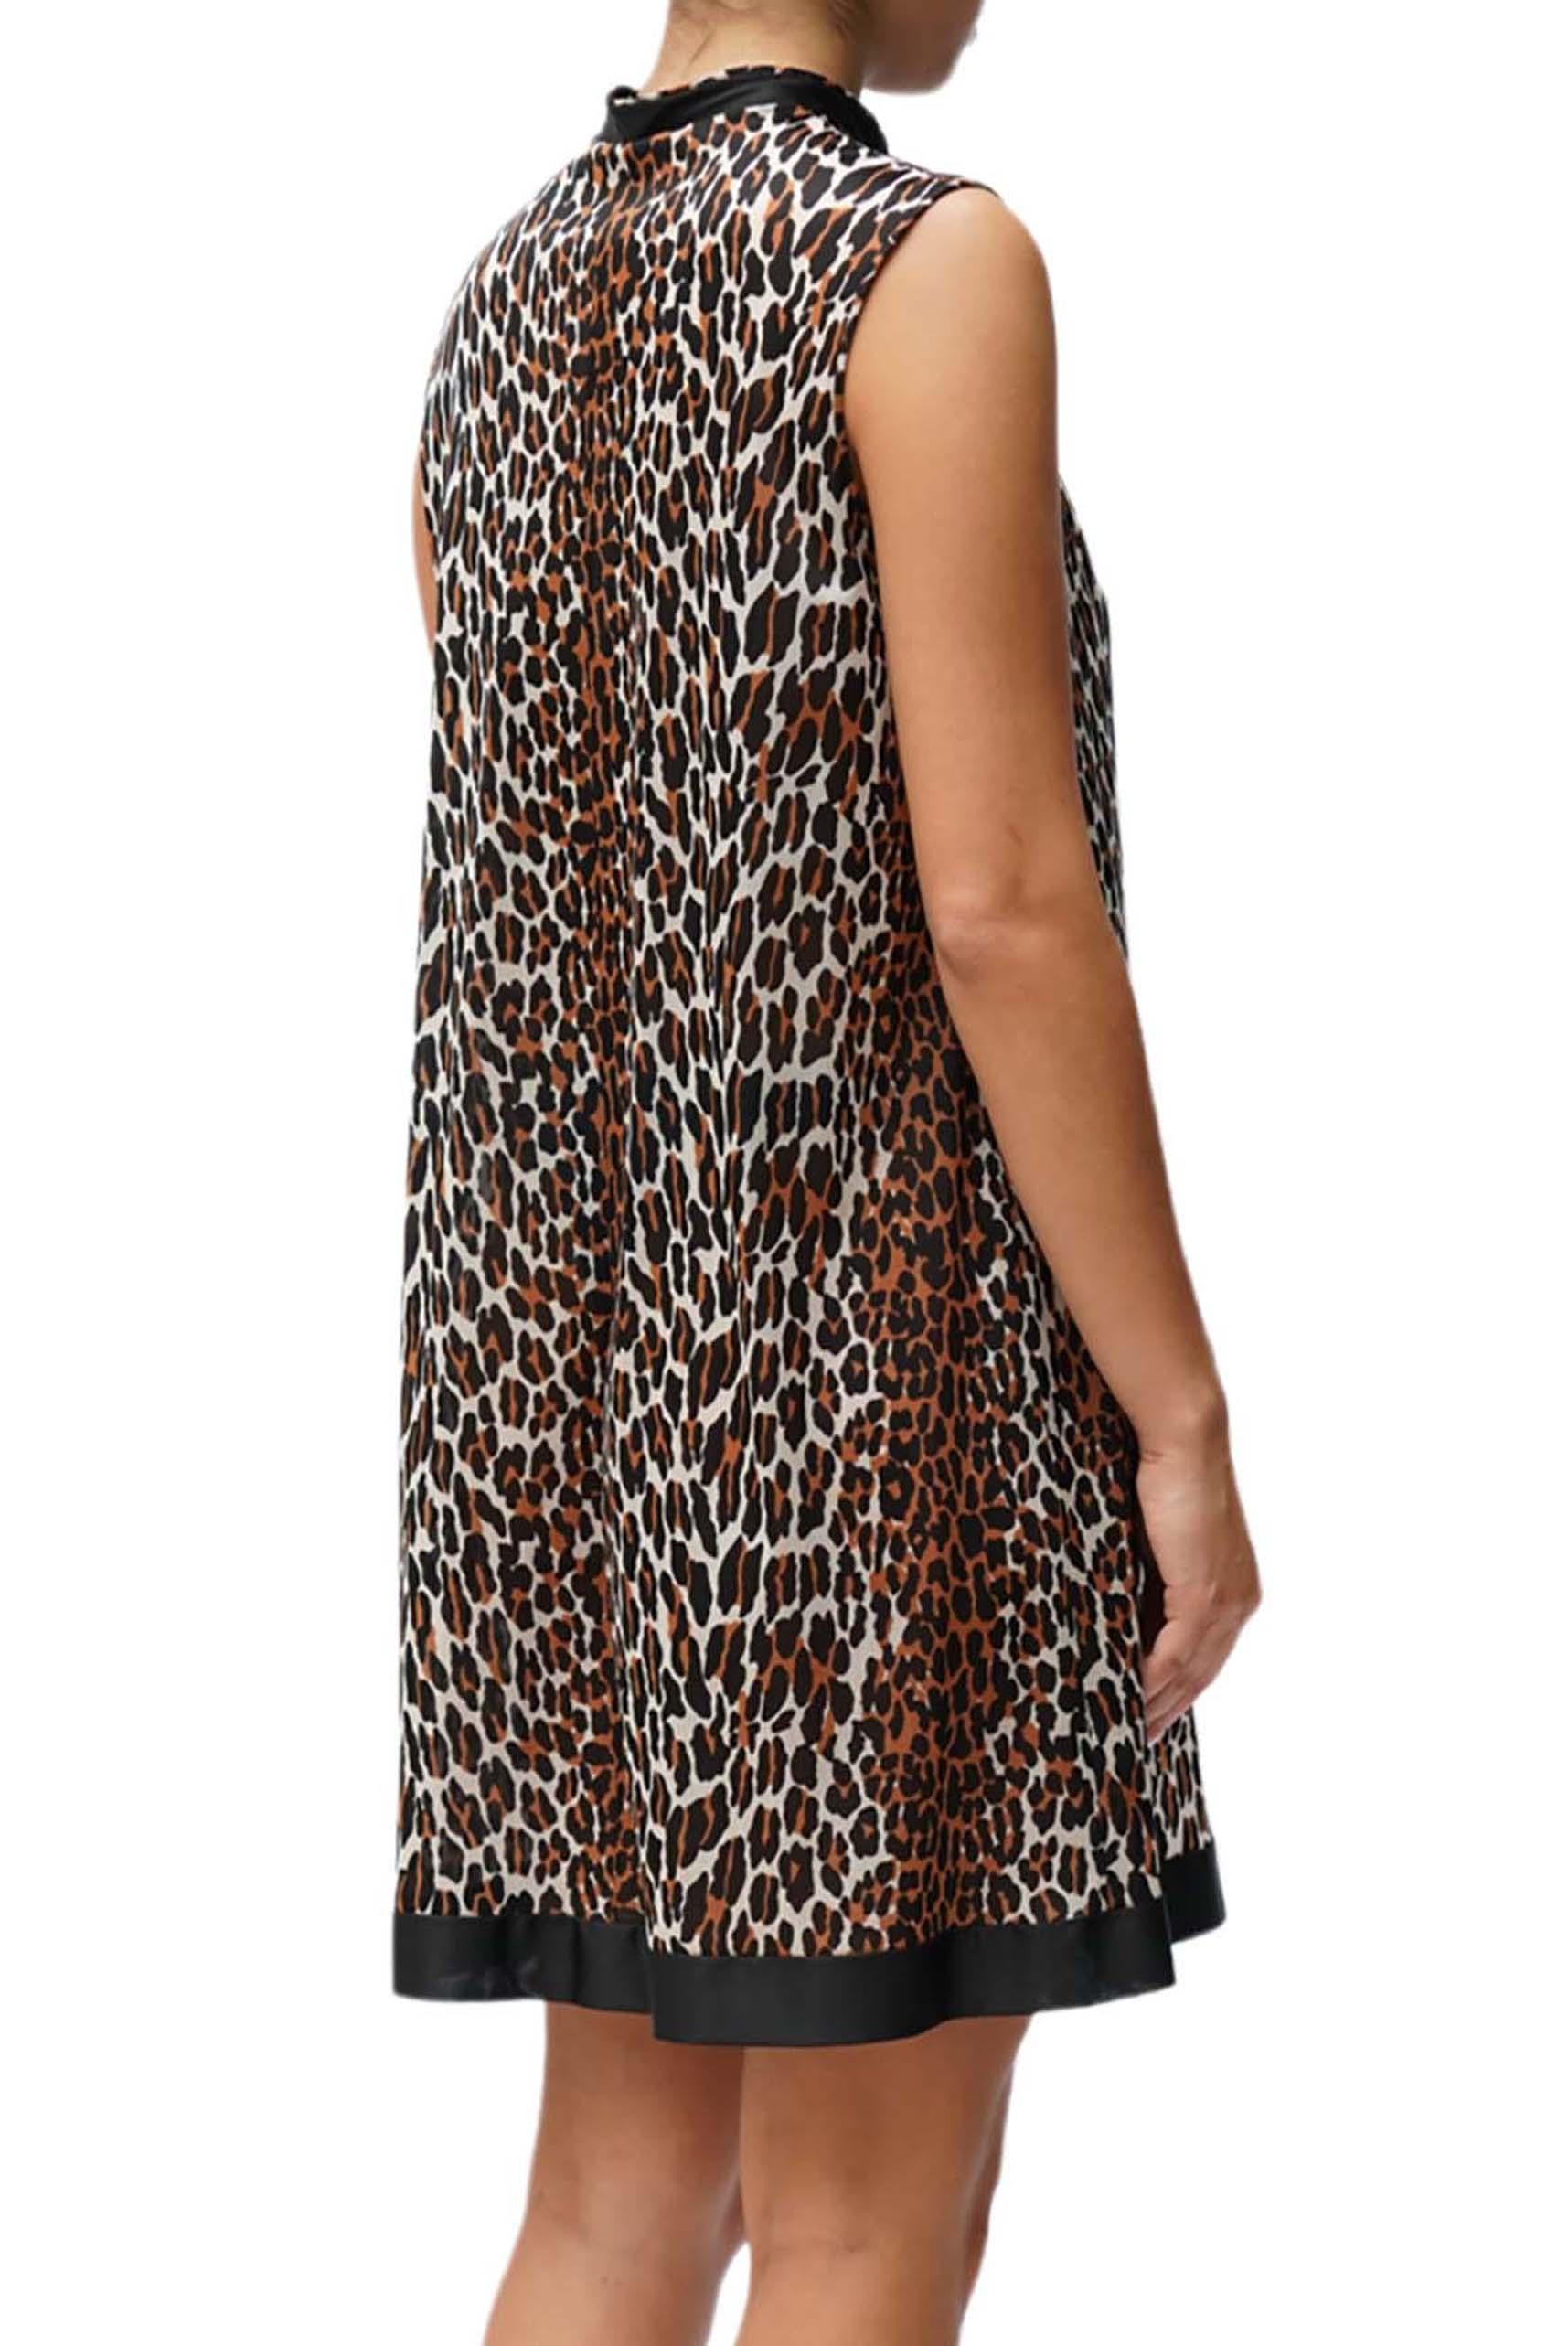 1960S Leopard Print Nylon Tricot Jersey Mod Slip Dress Negligee For Sale 1